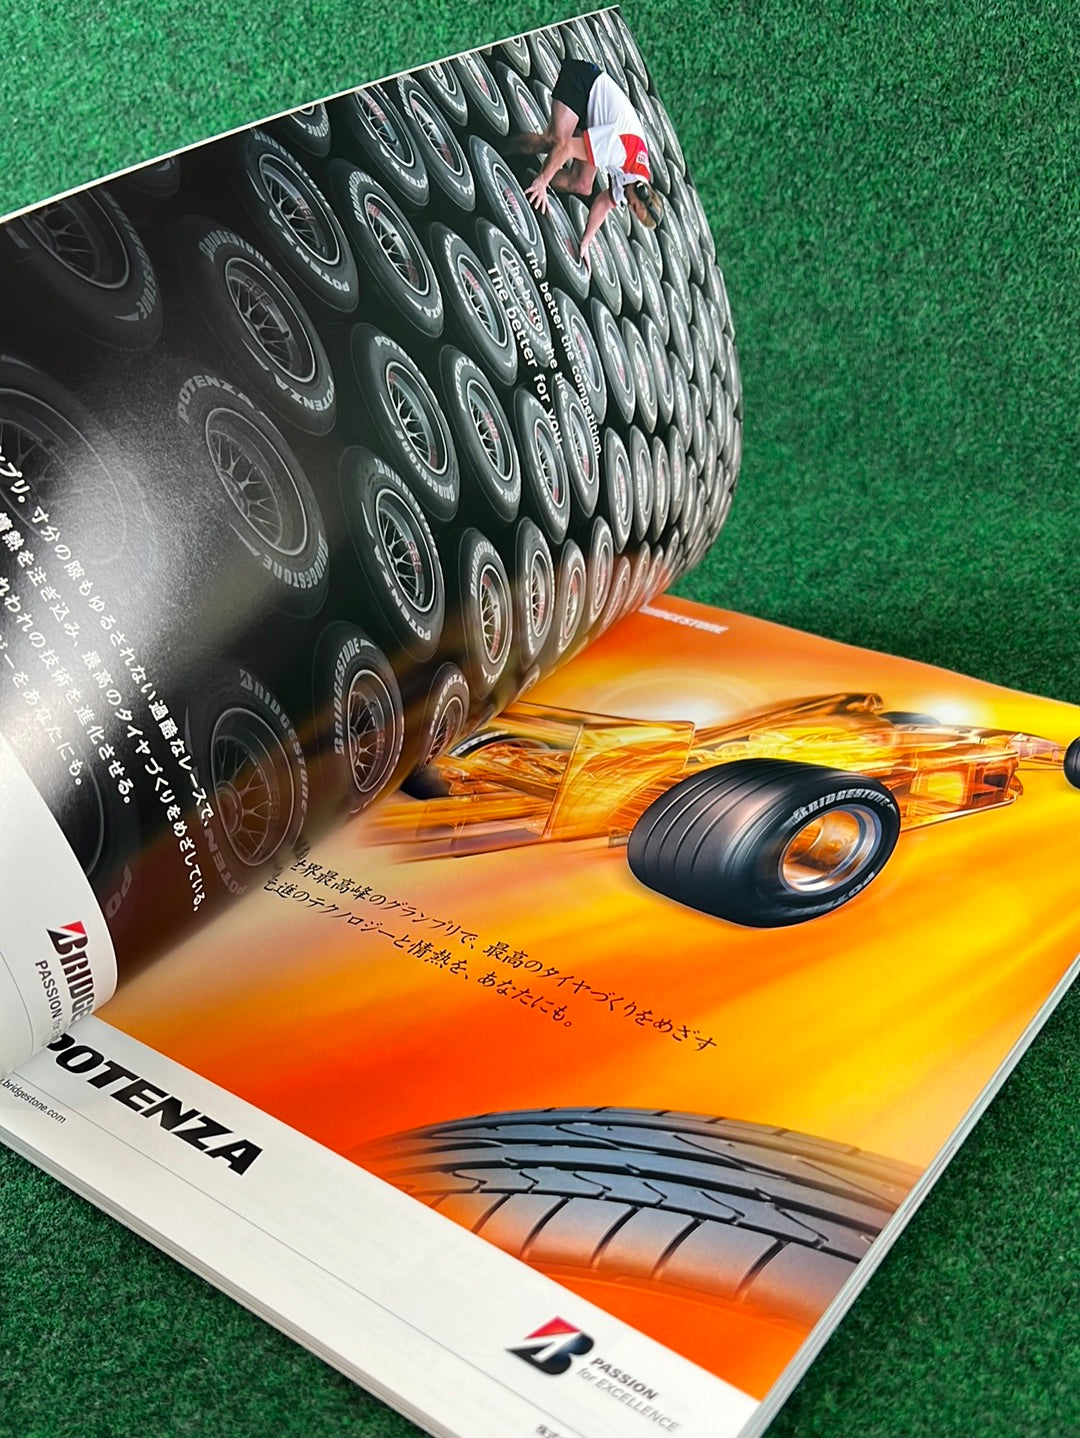 F1 - Fuji Television Japanese Grand Prix 2002 & 2003 Race Programs